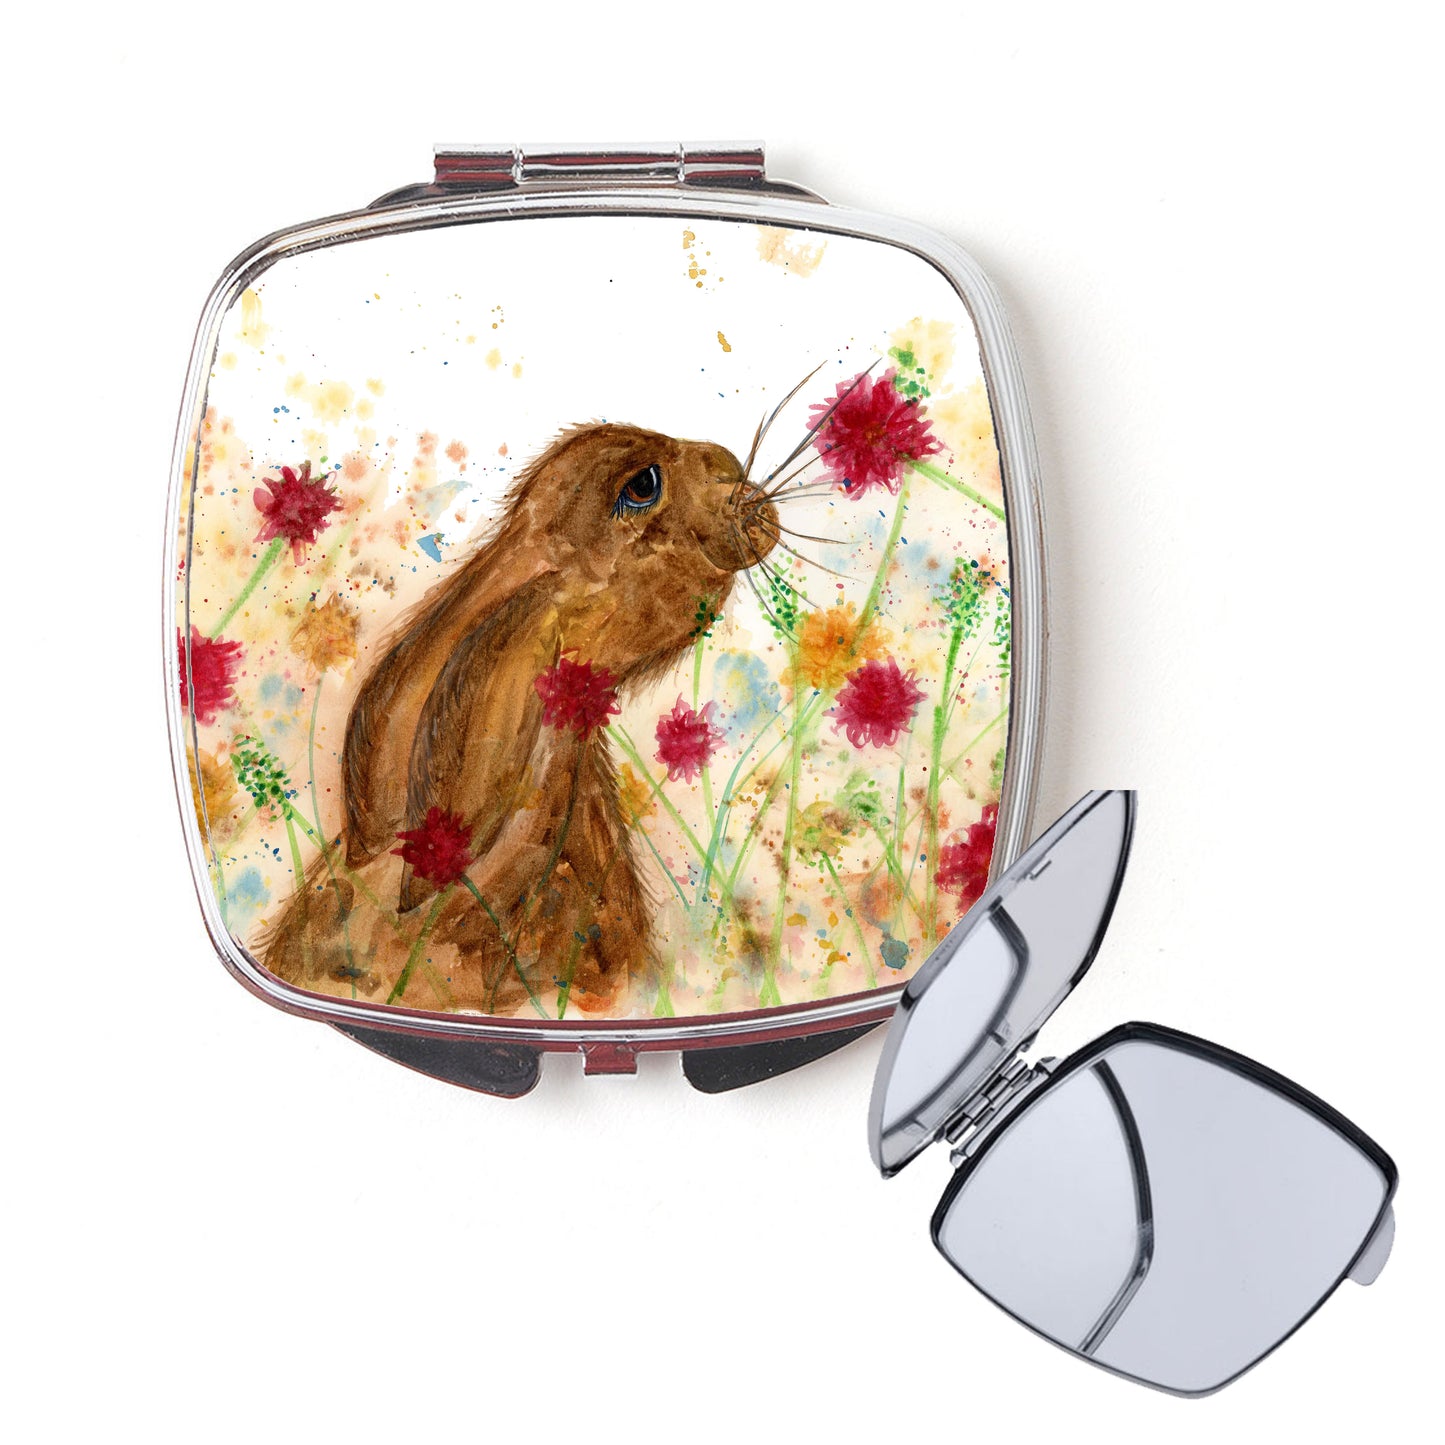 Meadow hare / rabbit compact mirror